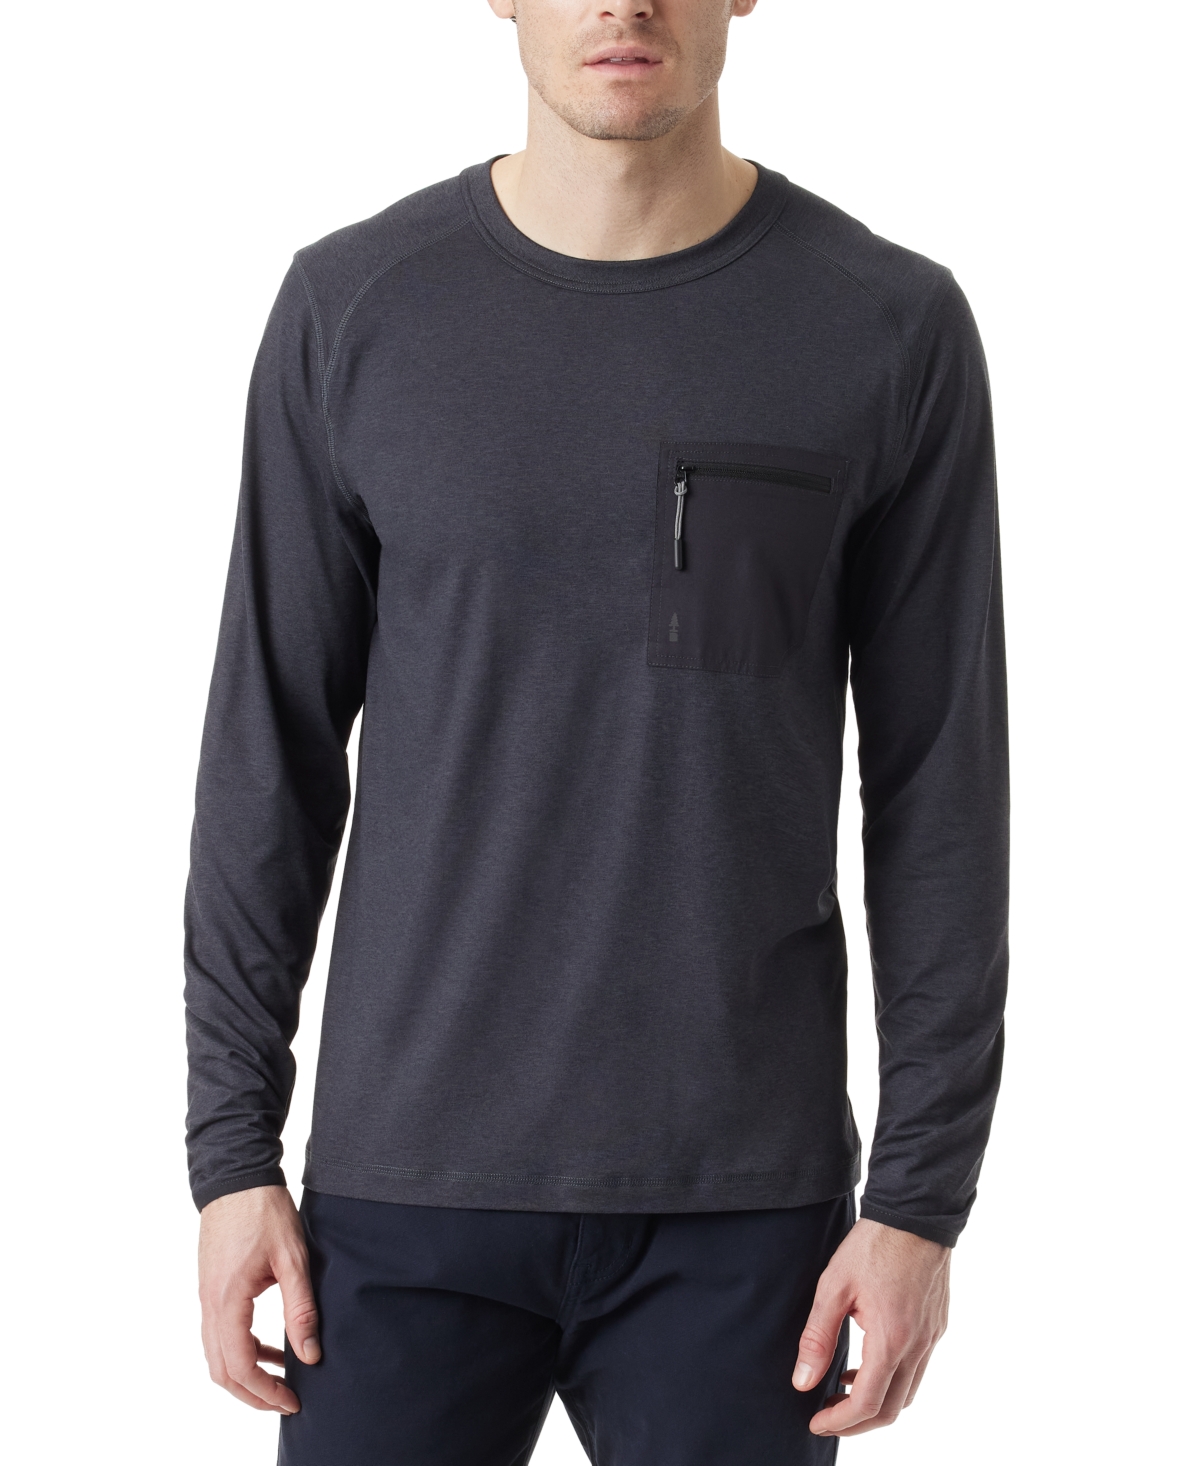 Men's Long-Sleeve Utili-Tee T-Shirt - Black Beauty